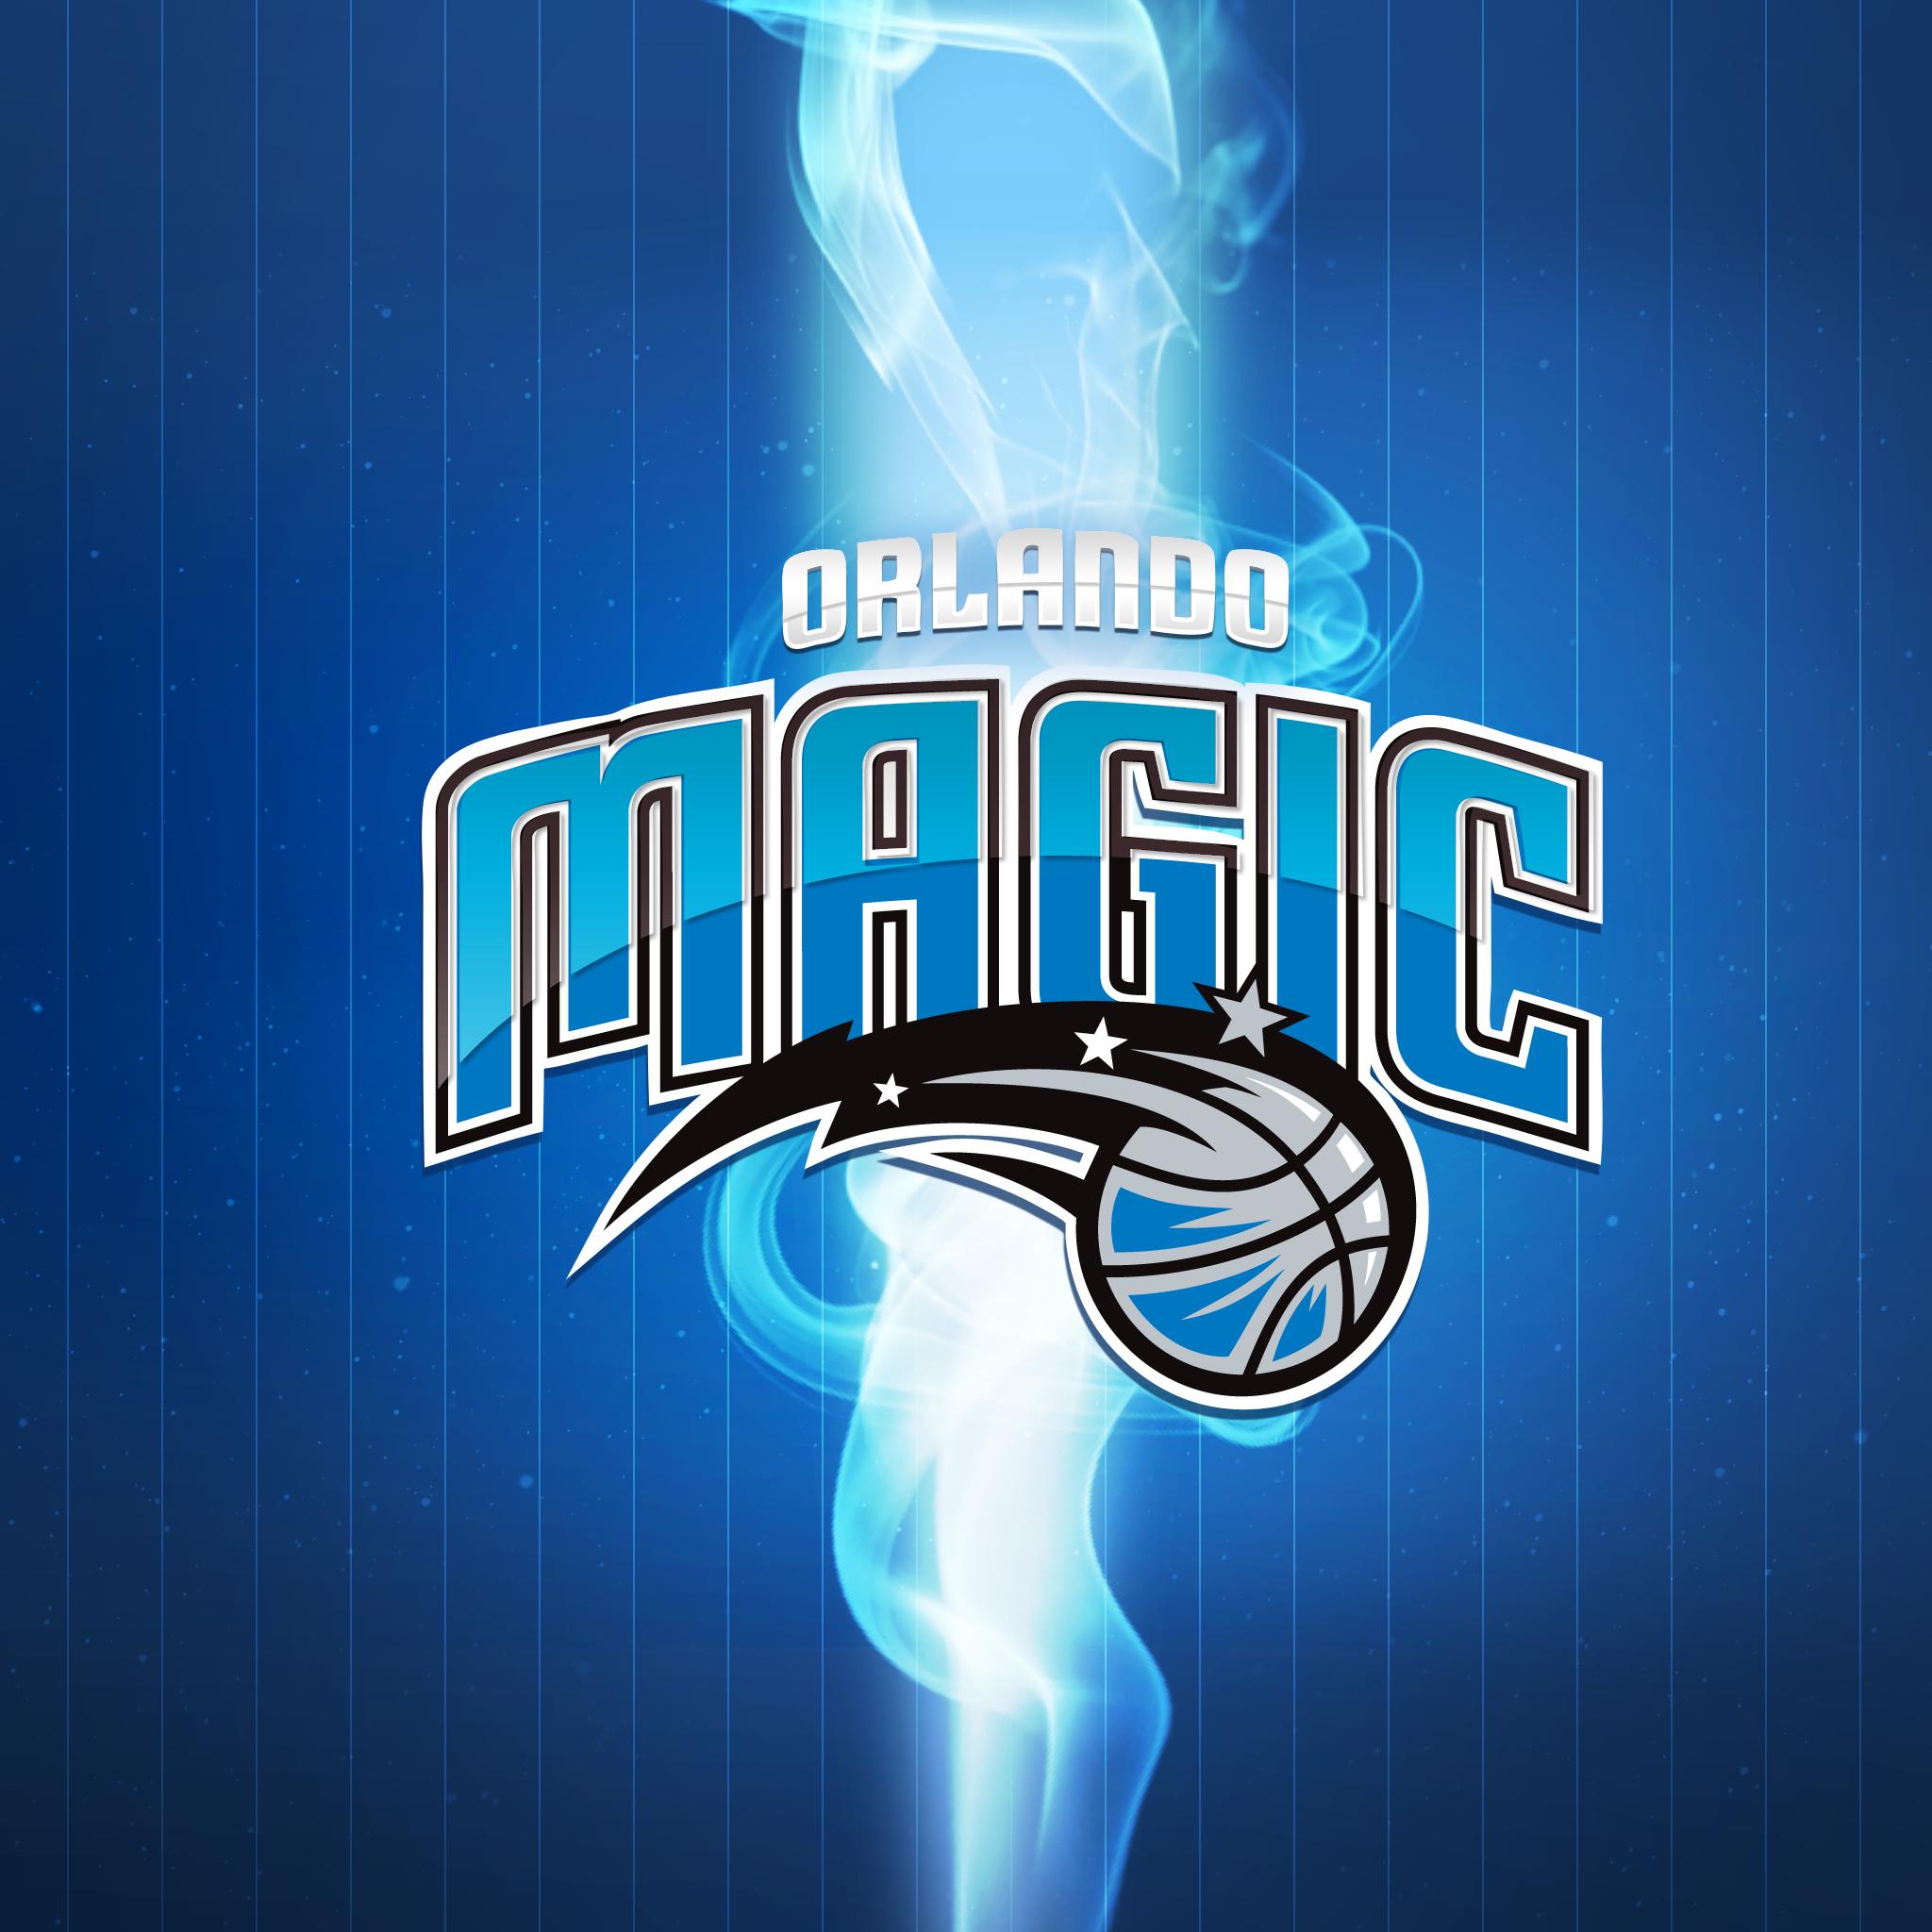 Orlando Magic Logo Images Media Files